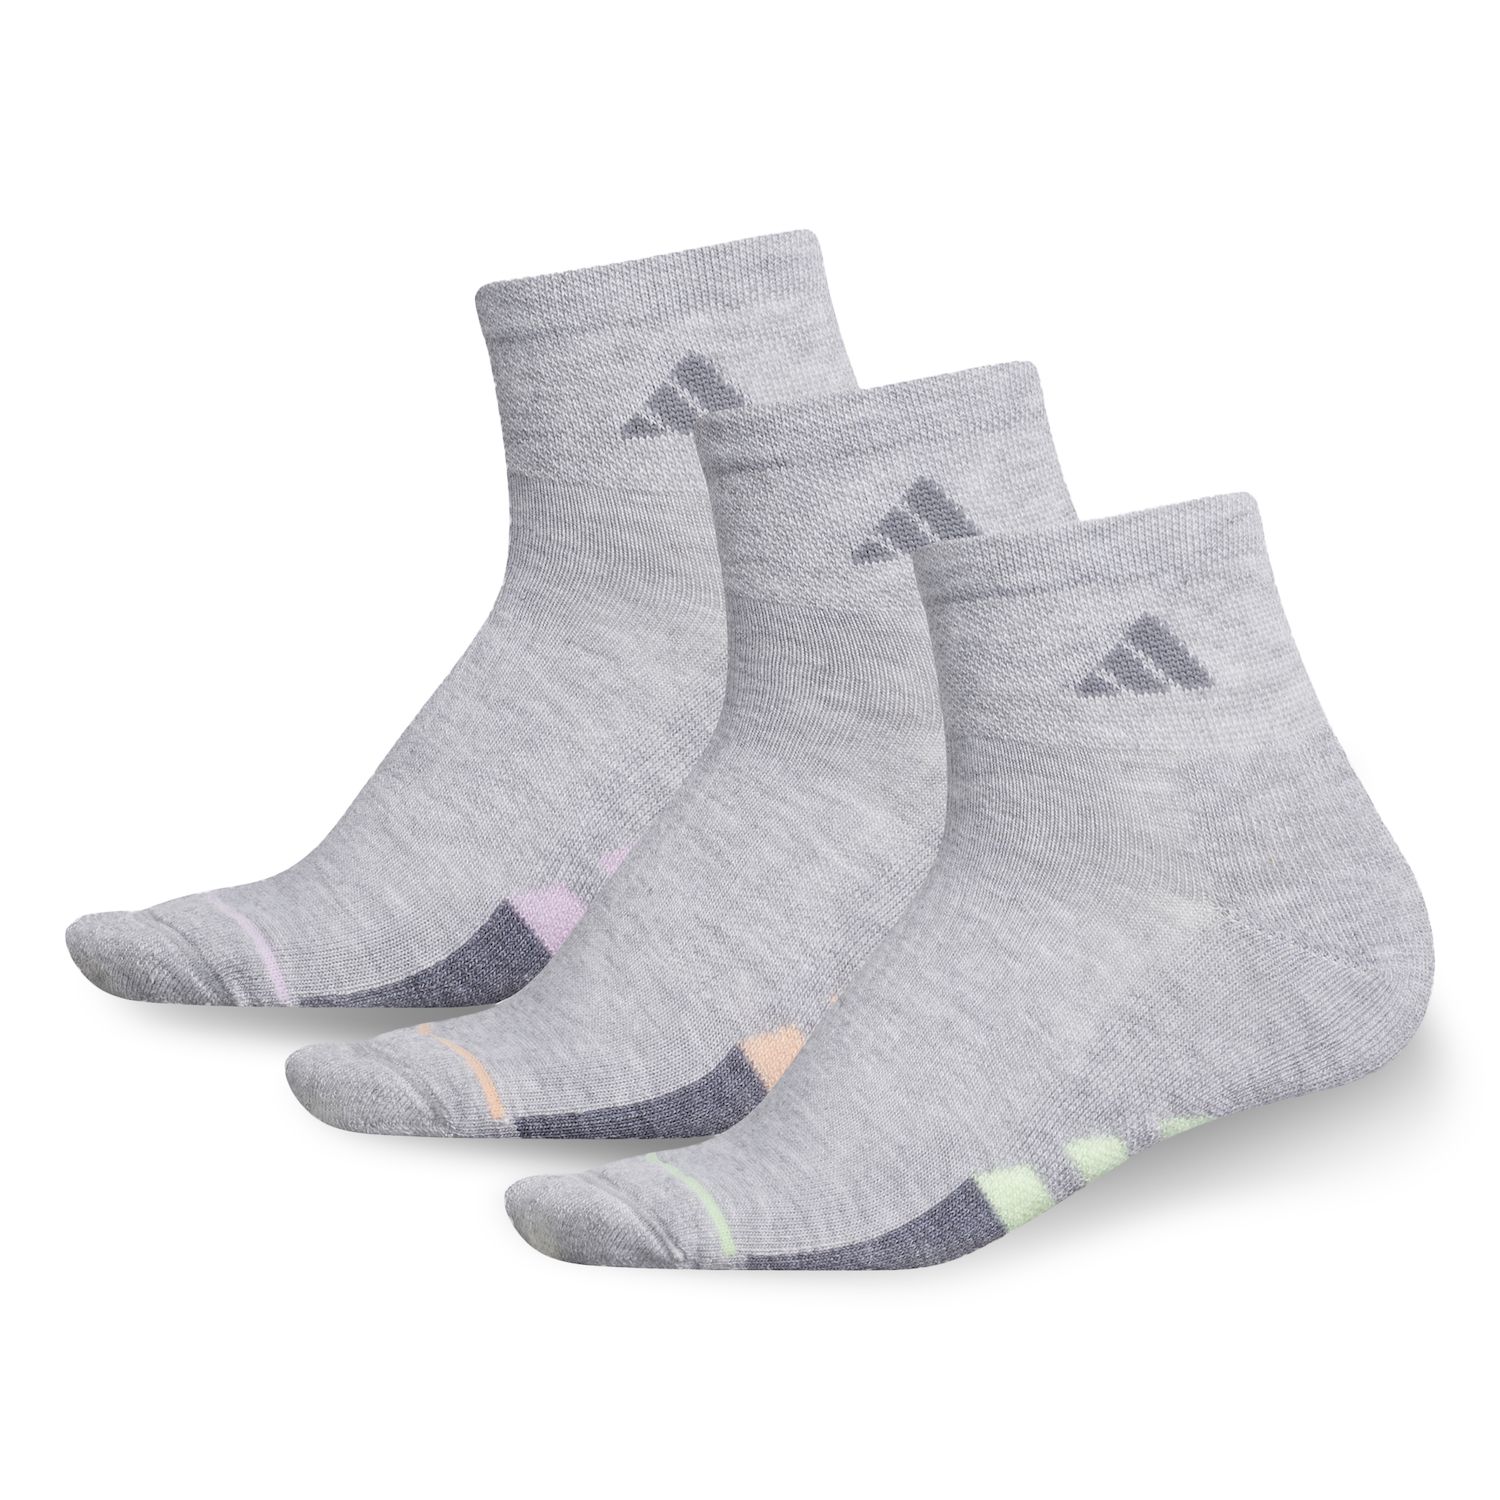 adidas women's quarter socks